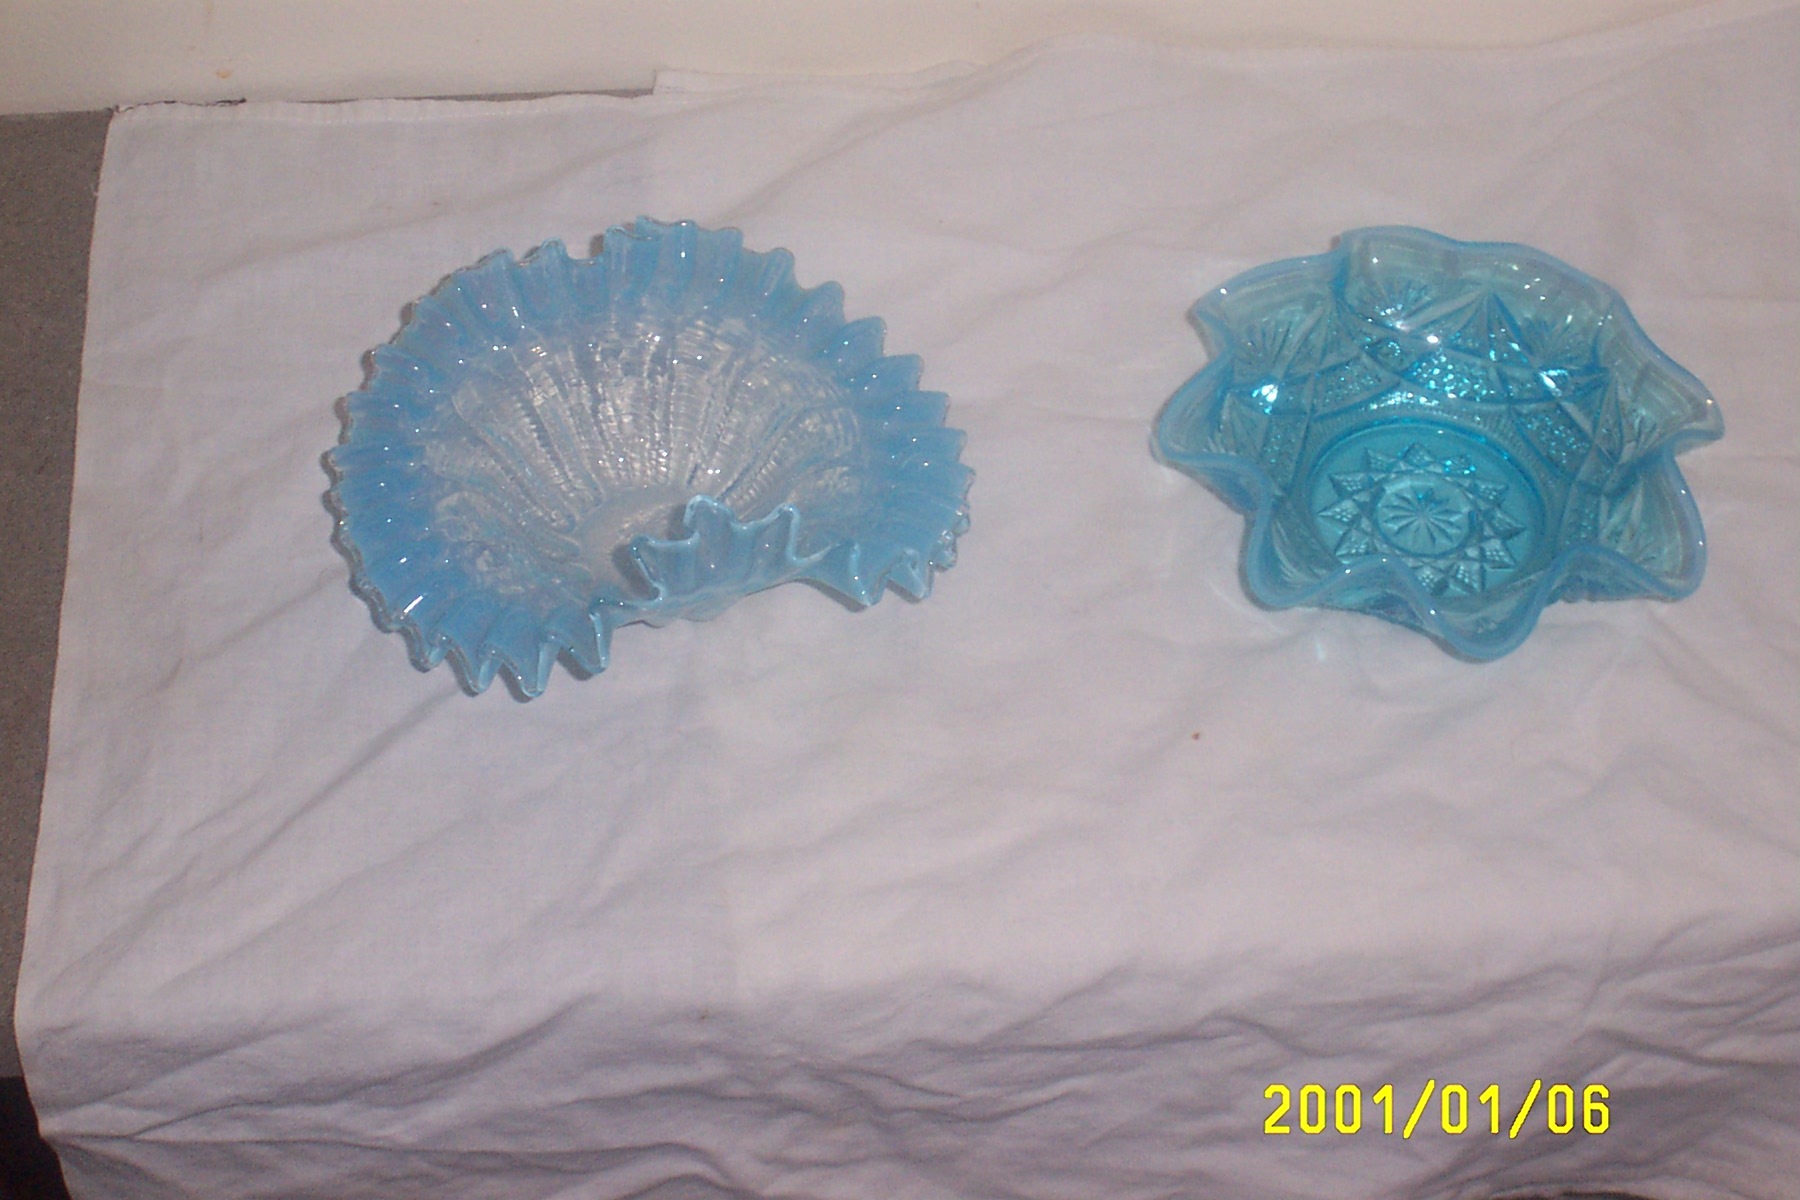 decortive glass bowls two bowls